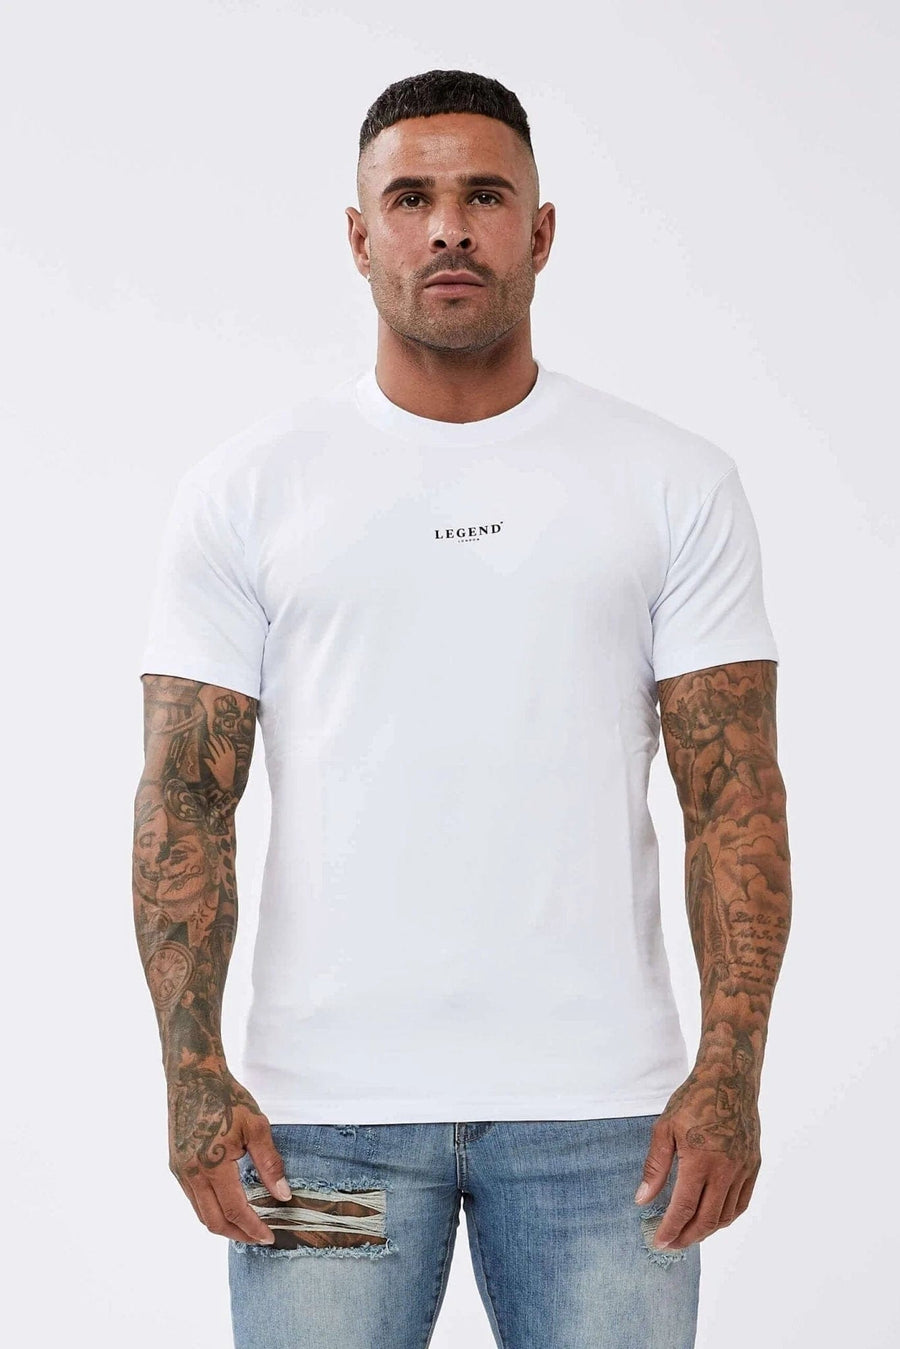 Legend London Tshirts CENTER LOGO T-SHIRT - WHITE